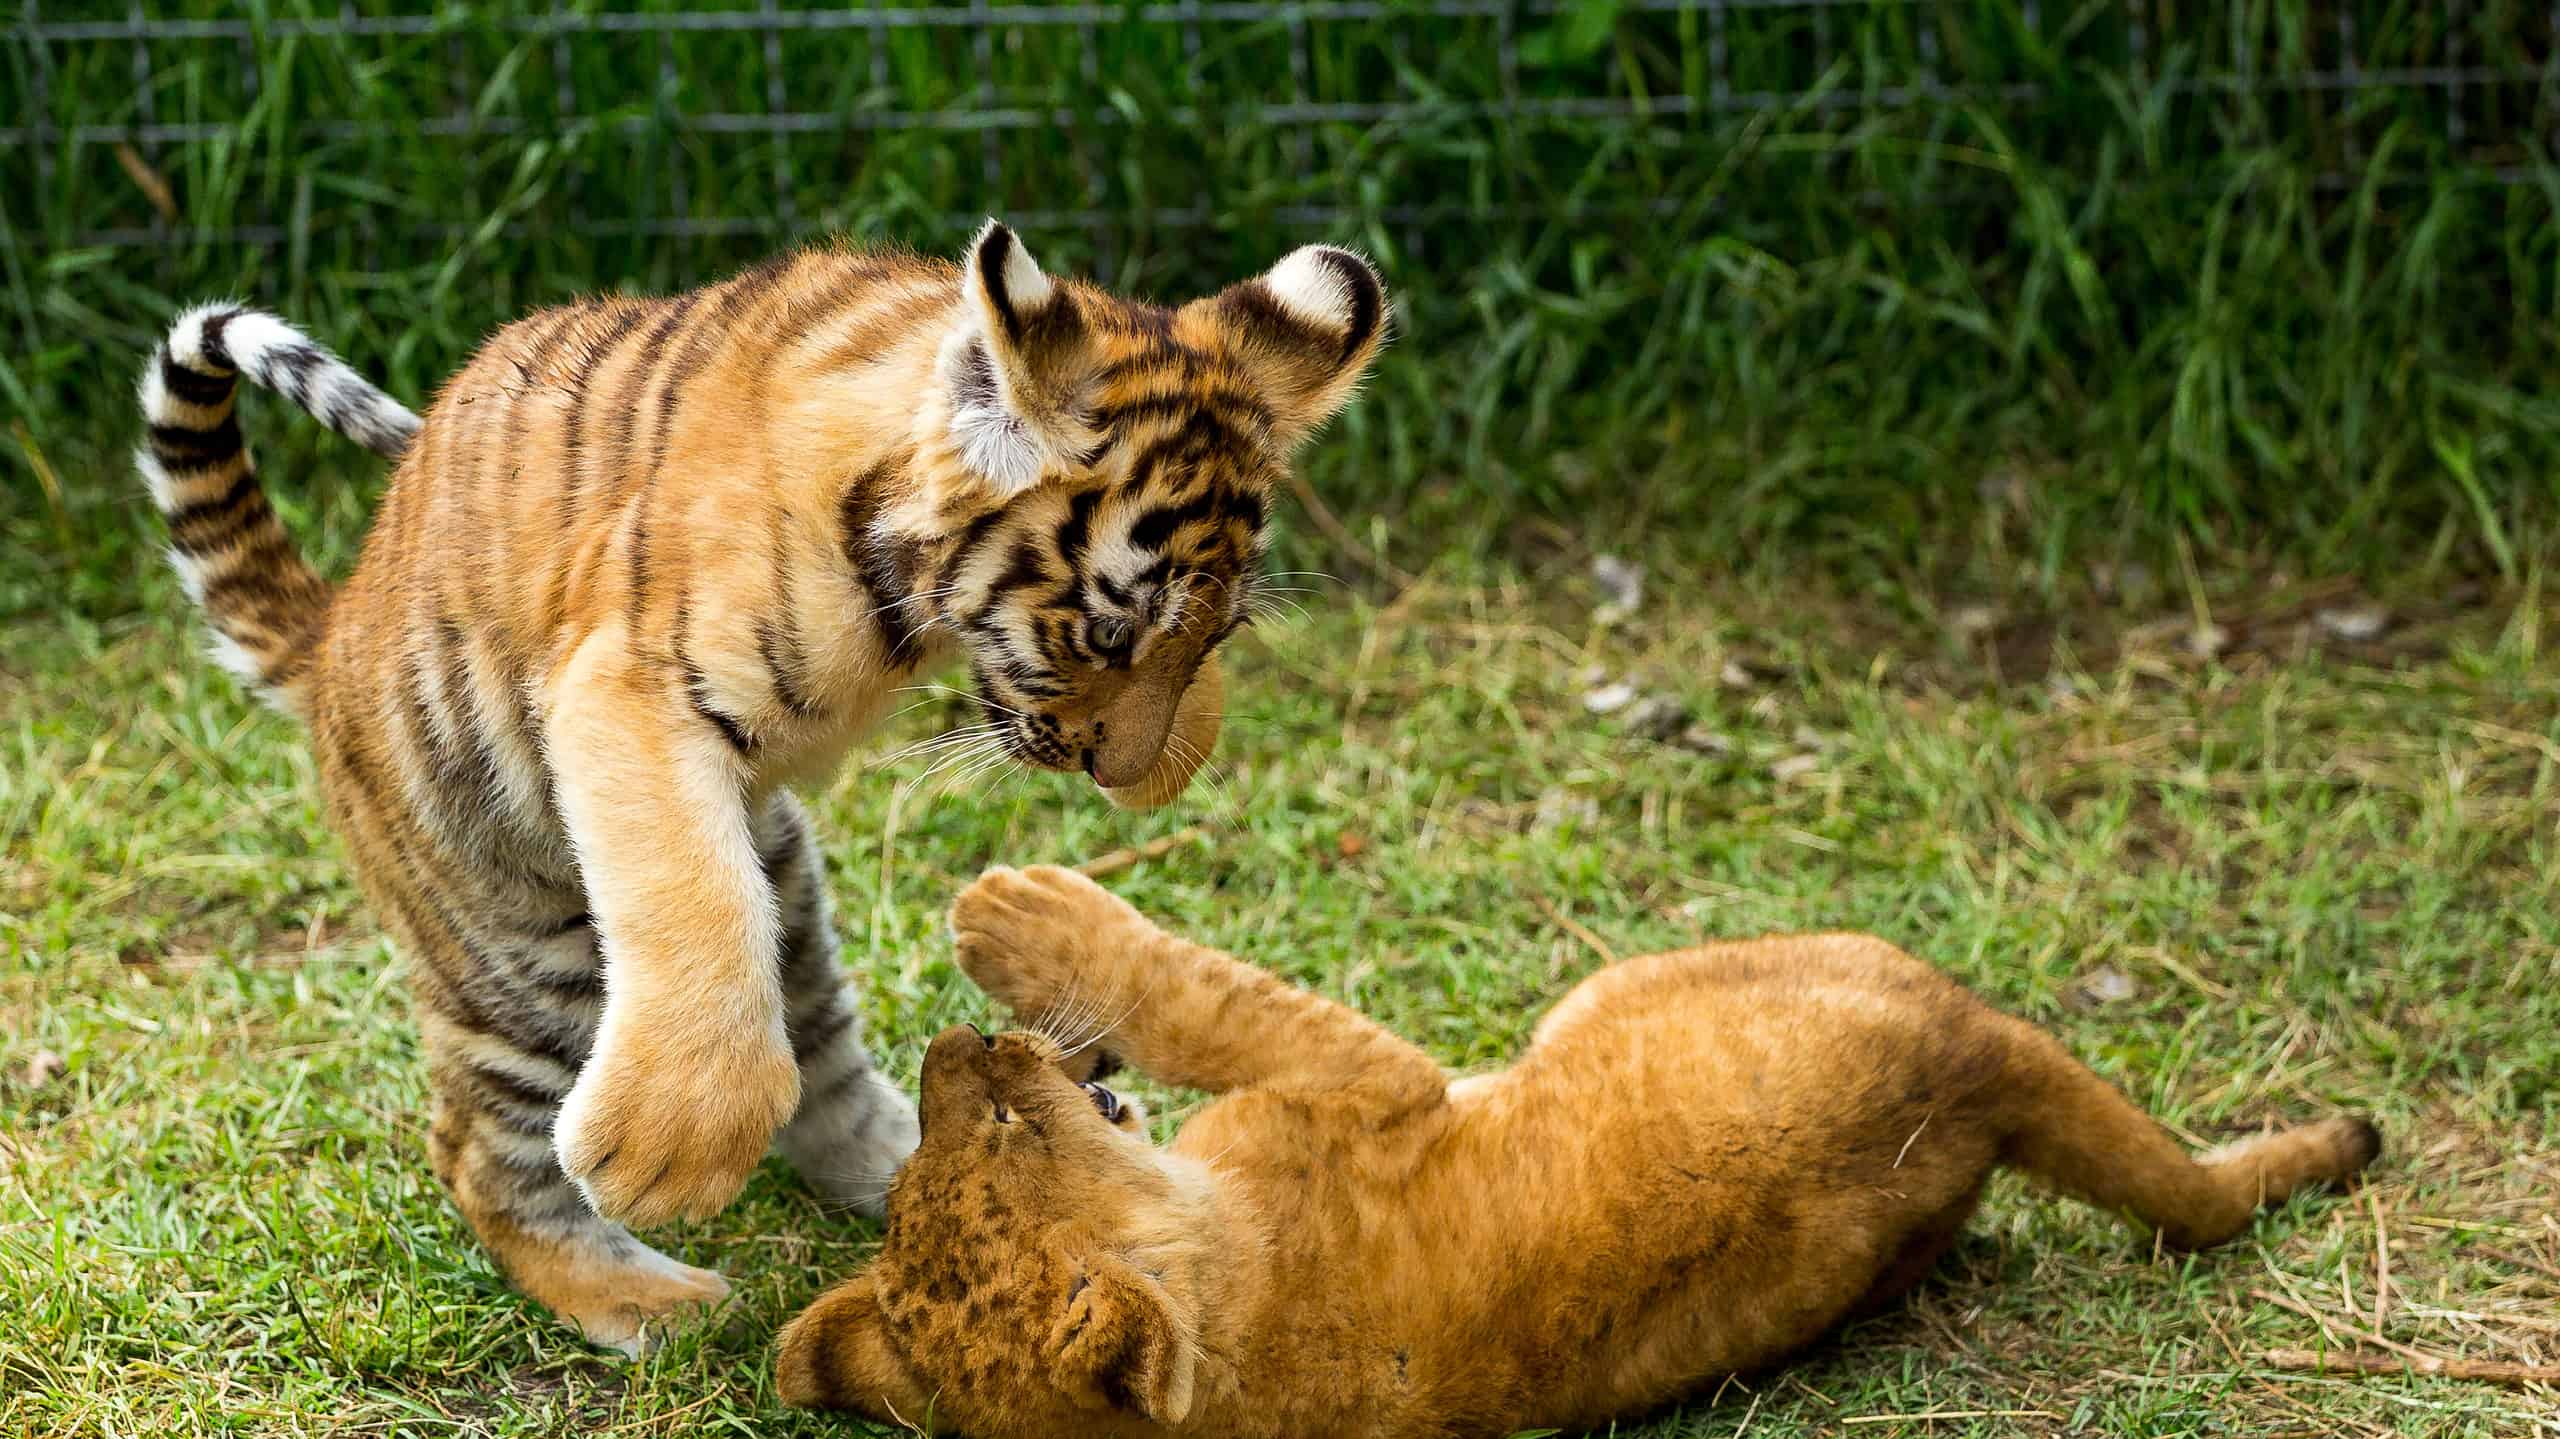 Lion Vs Tiger Fight